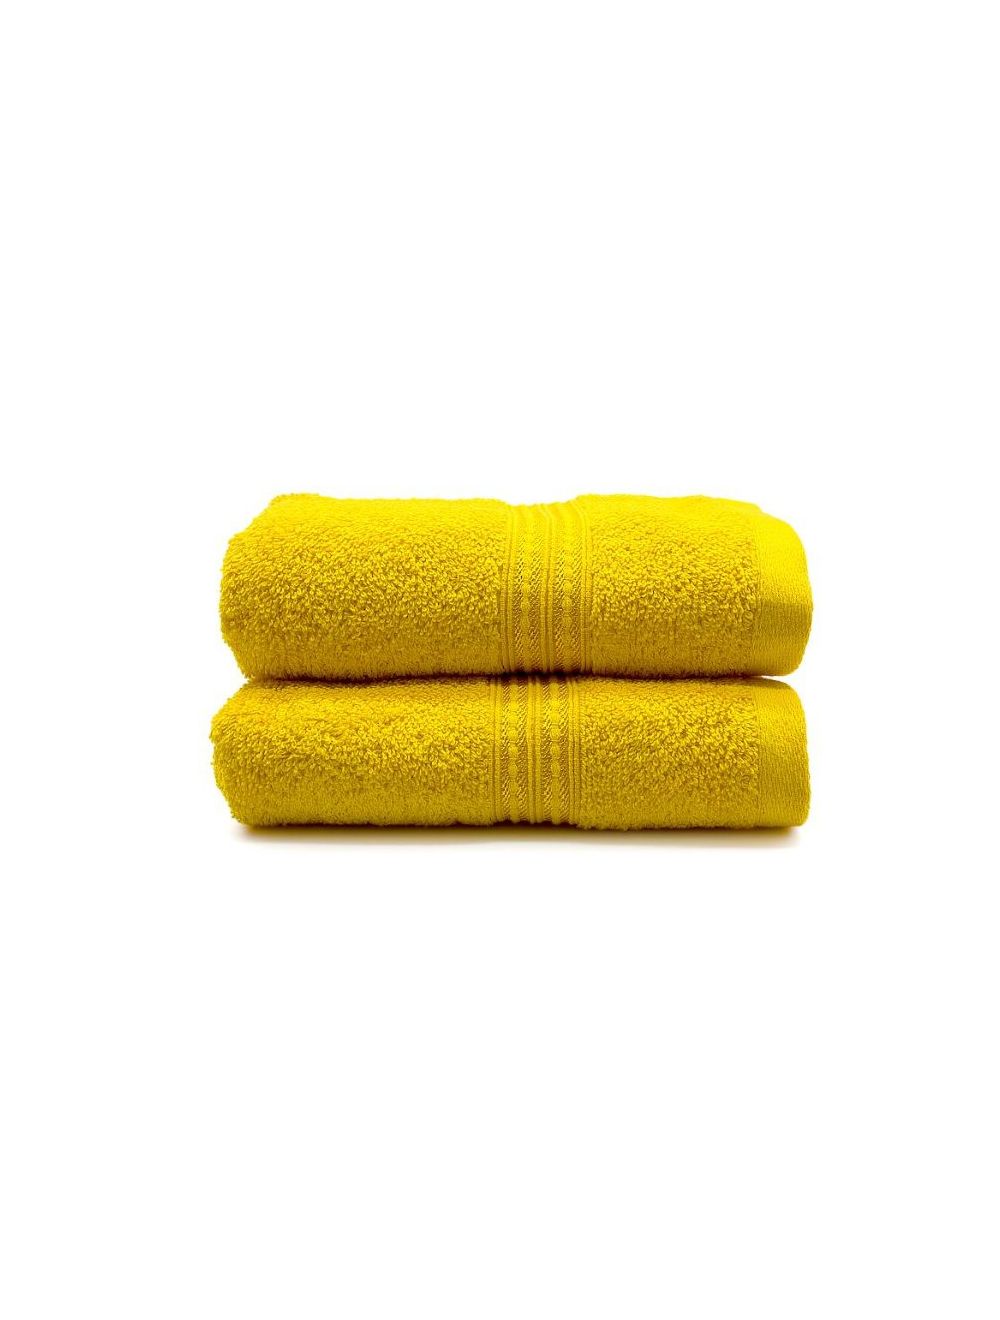 Rahalife 100% Cotton 2-Piece Hand Towel Set, Classic Collection, Yellow-14RLHT025